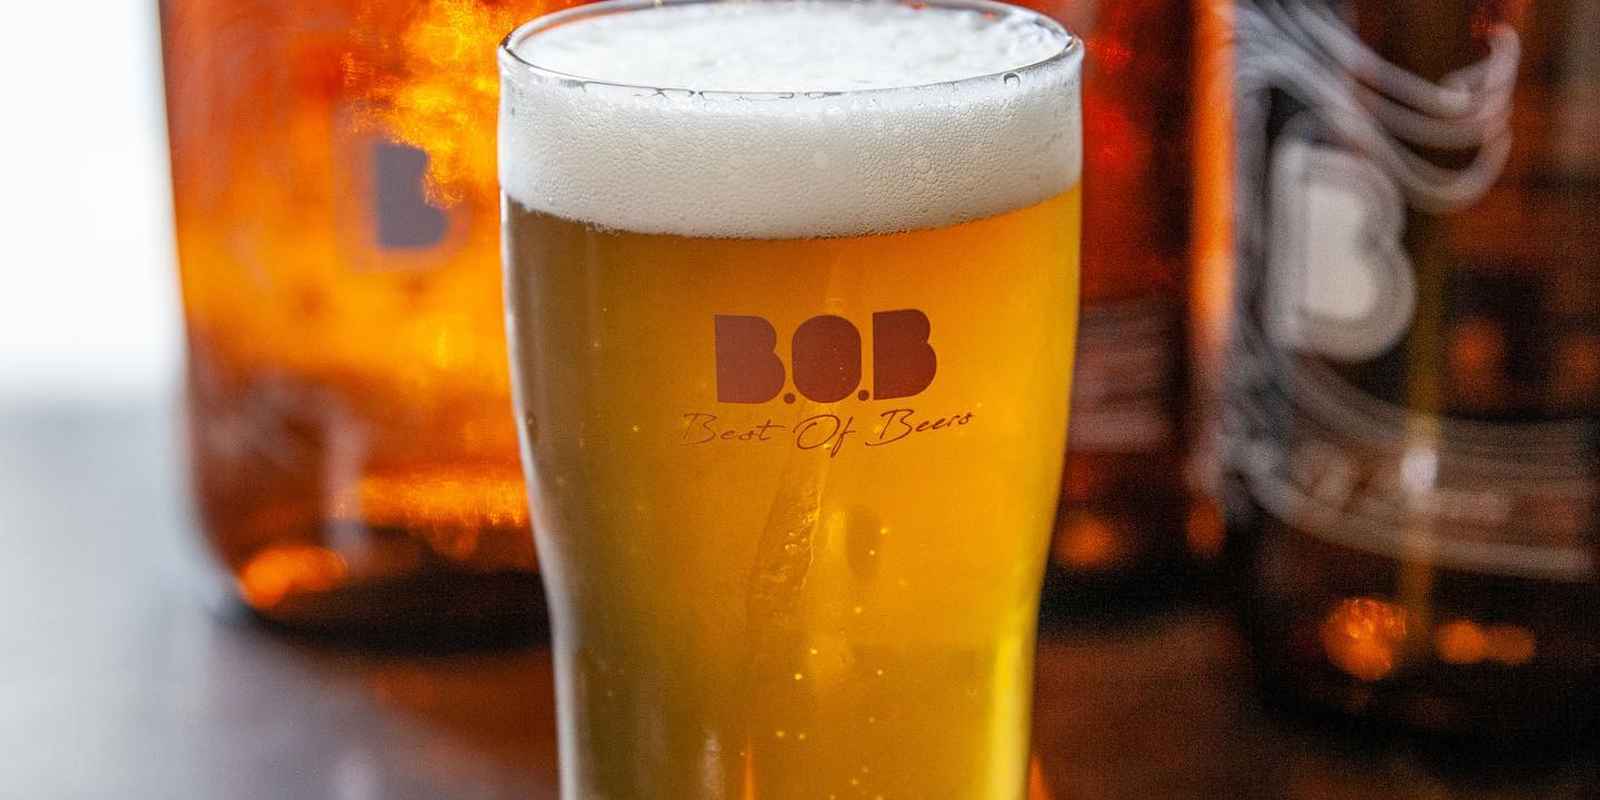 BOBs Beer